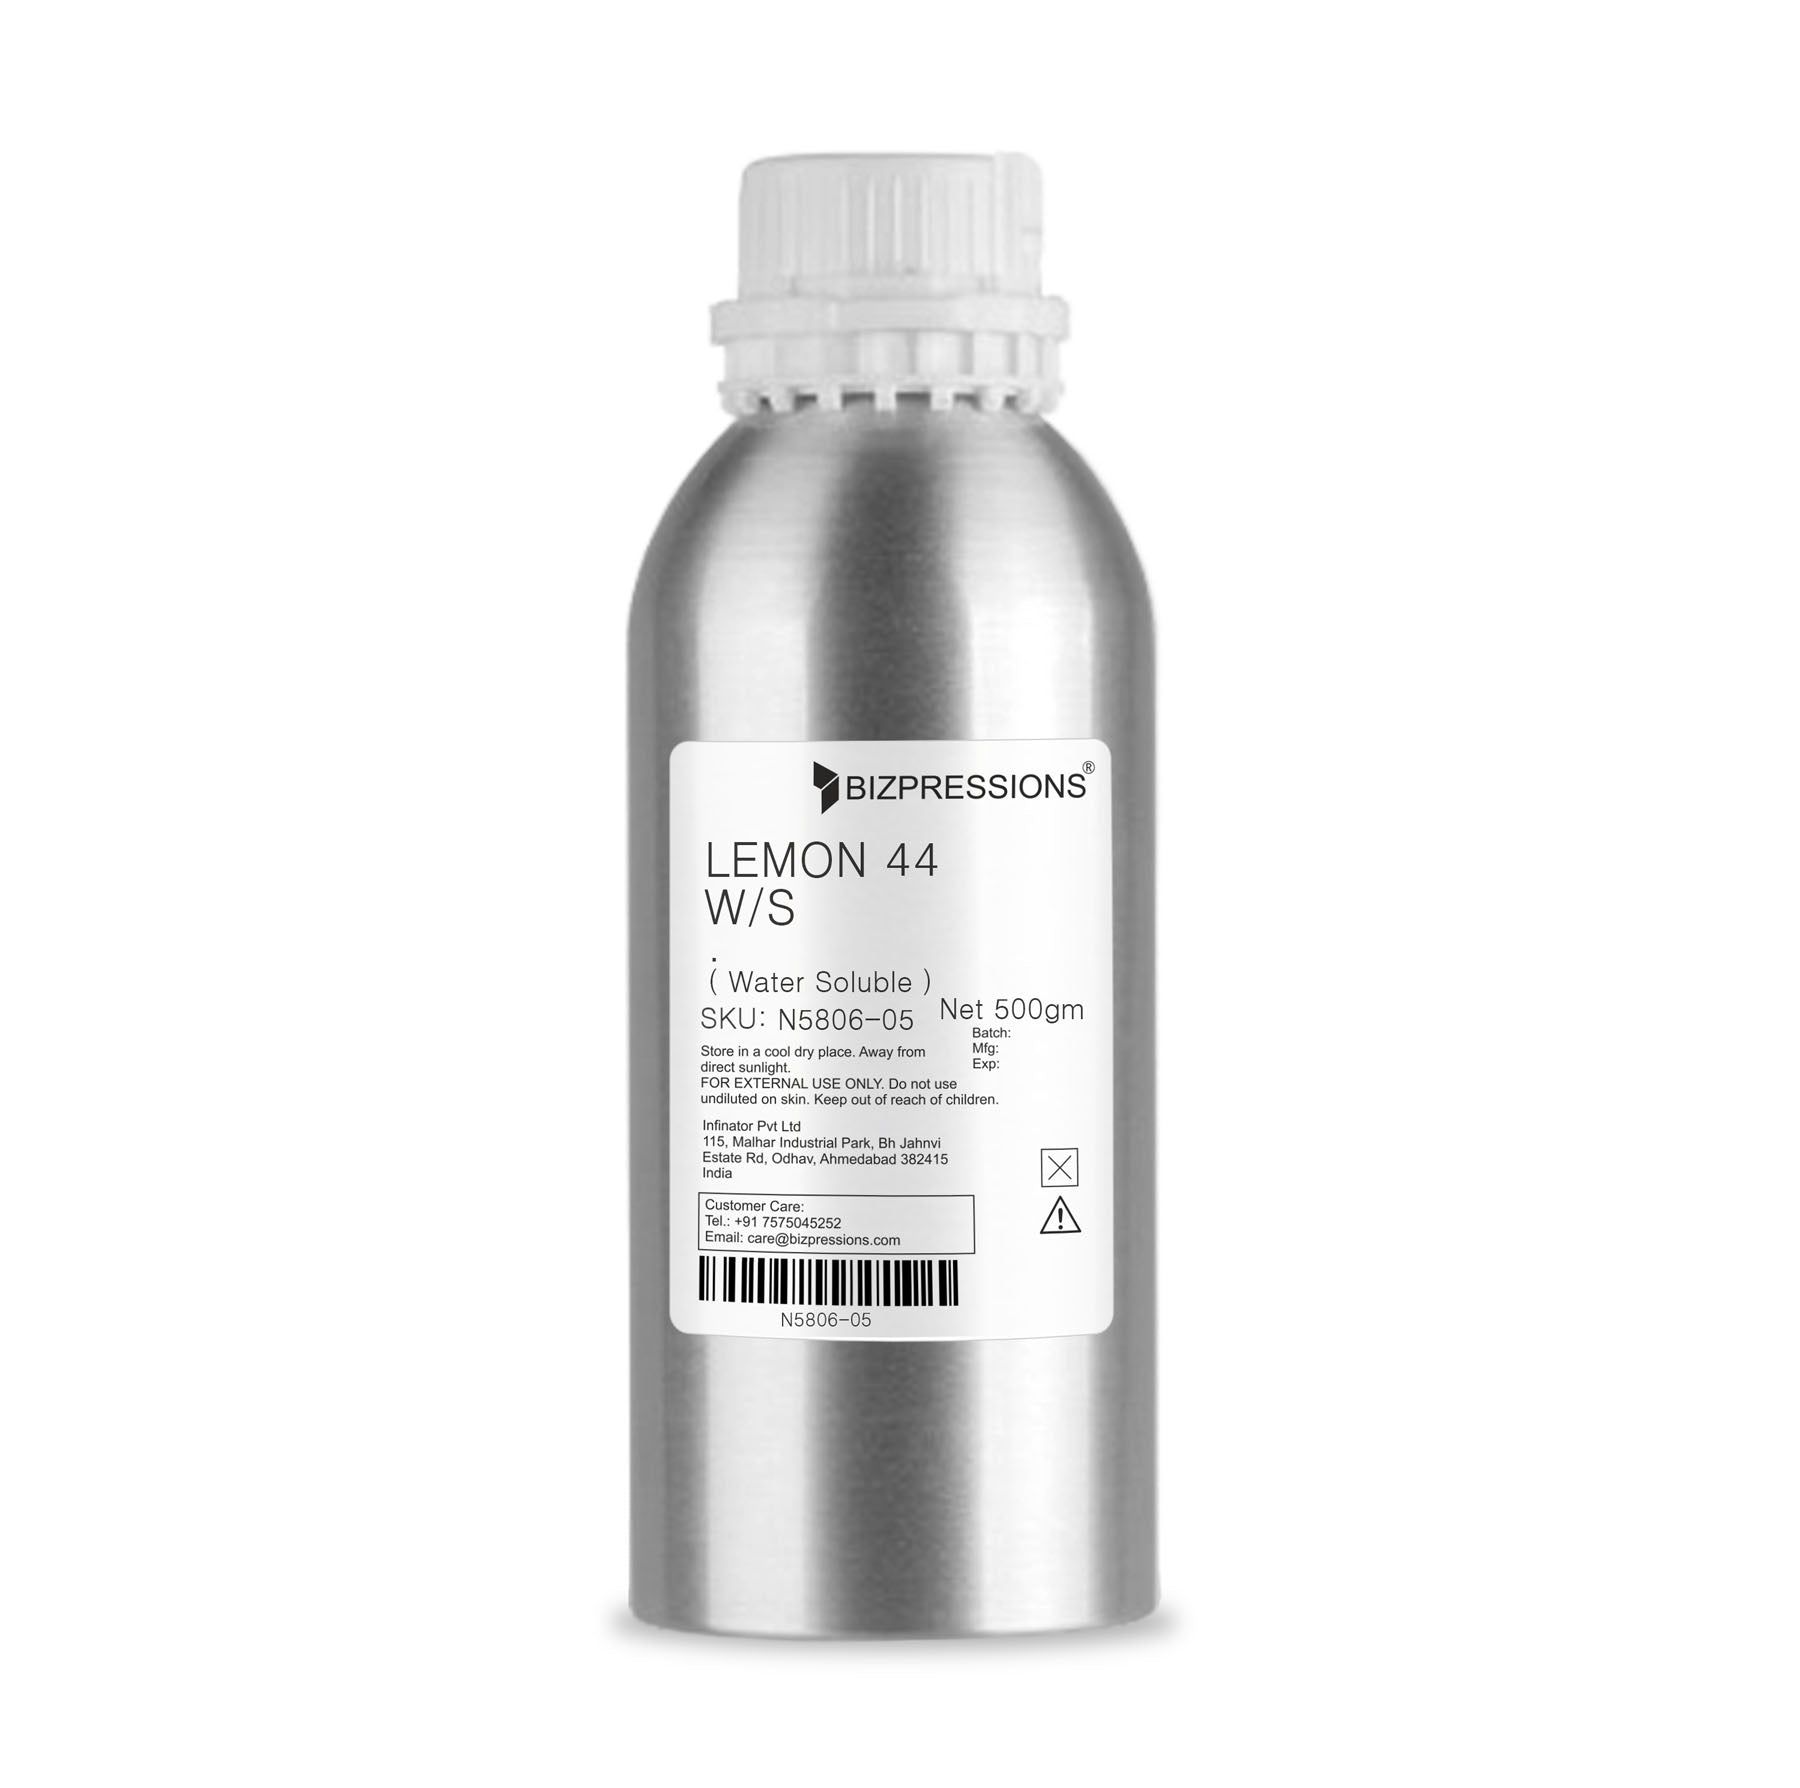 LEMON 44 W/S - Fragrance ( Water Soluble ) - 500 gm